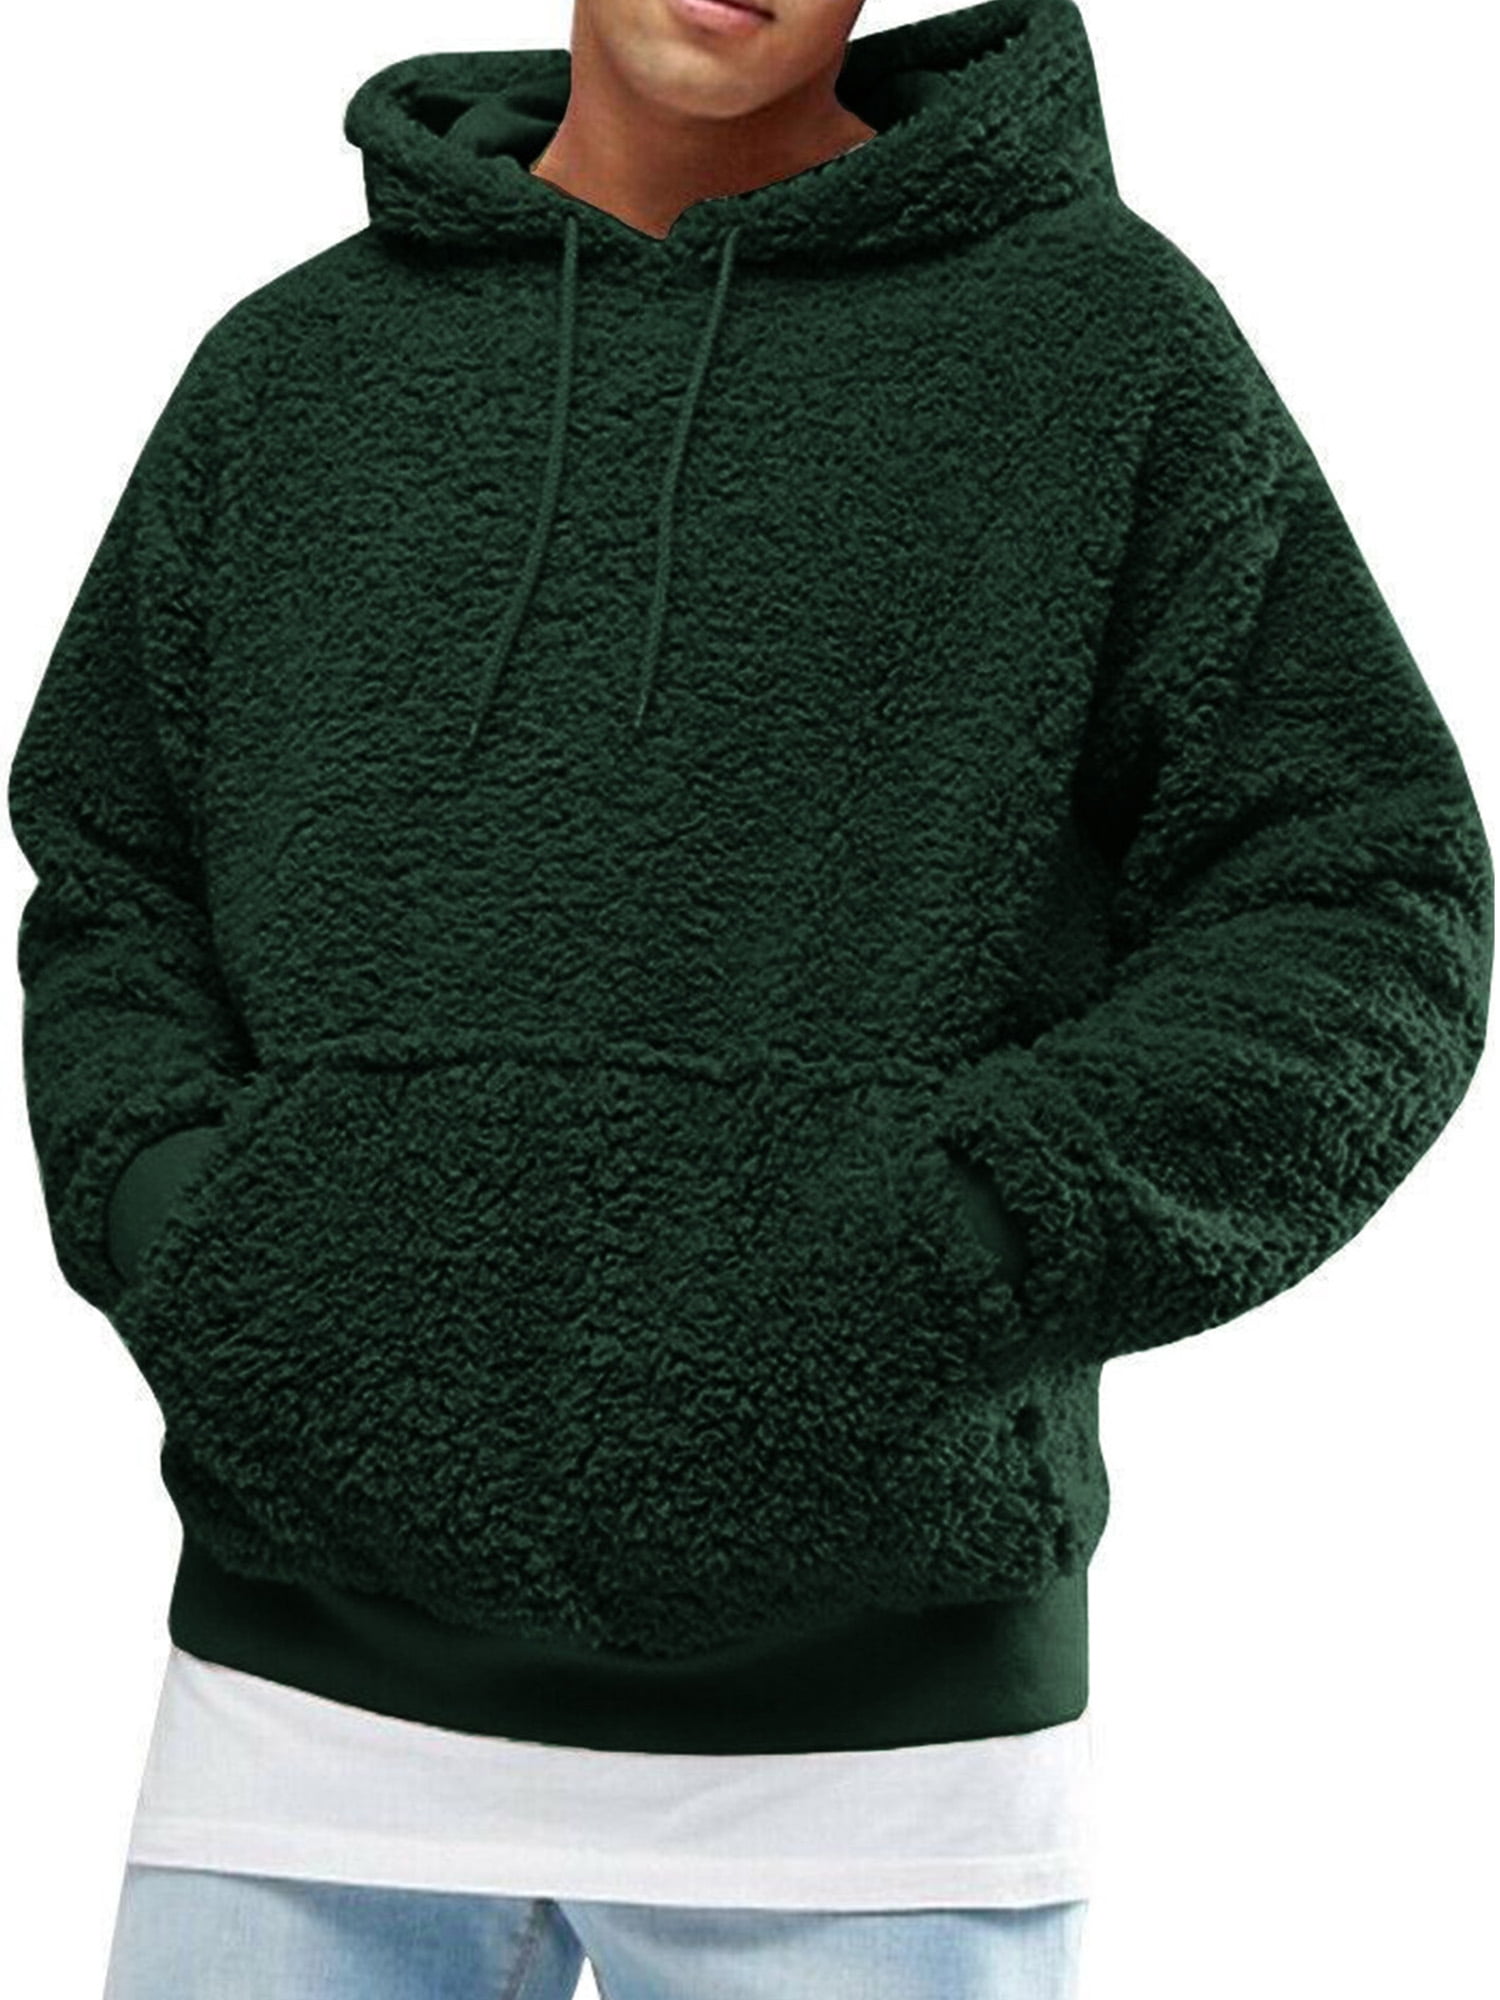 Sumen Teen Boys Outerwear Mens Winter Warm Hooded Sweatshirt Jacket with Pockets S-XXL